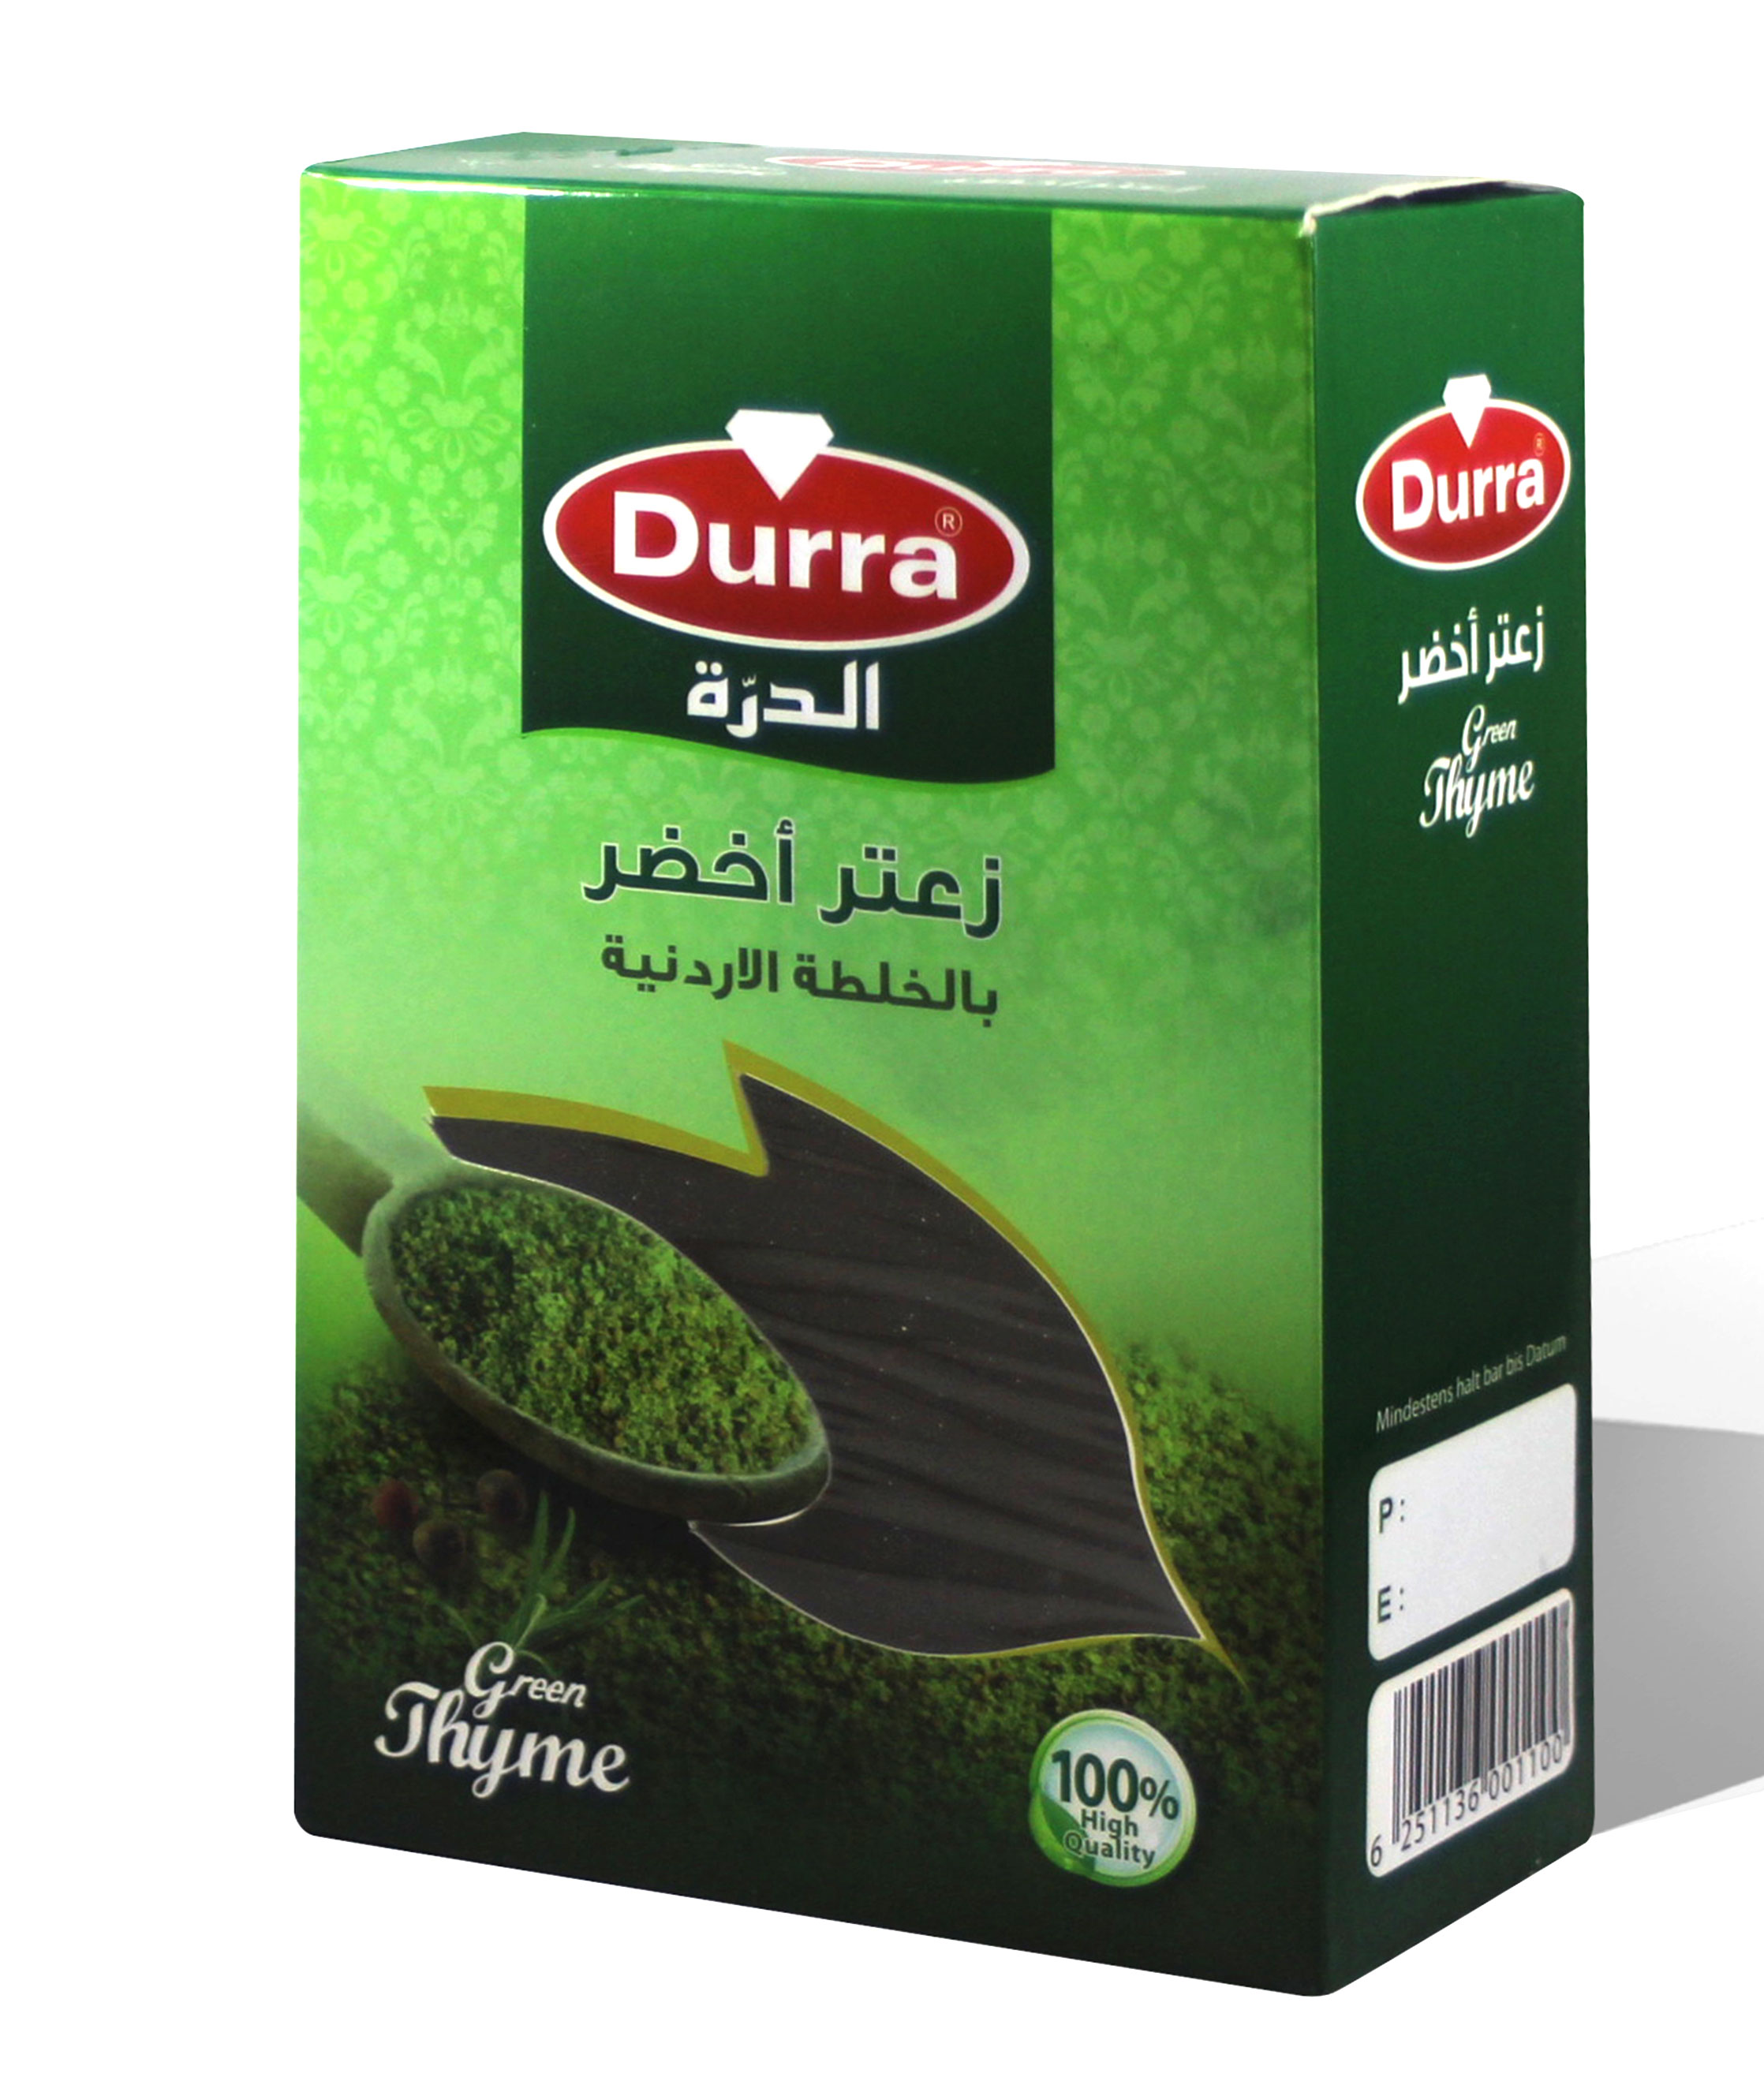 Green thyme Jordanian recipe carton 350 g